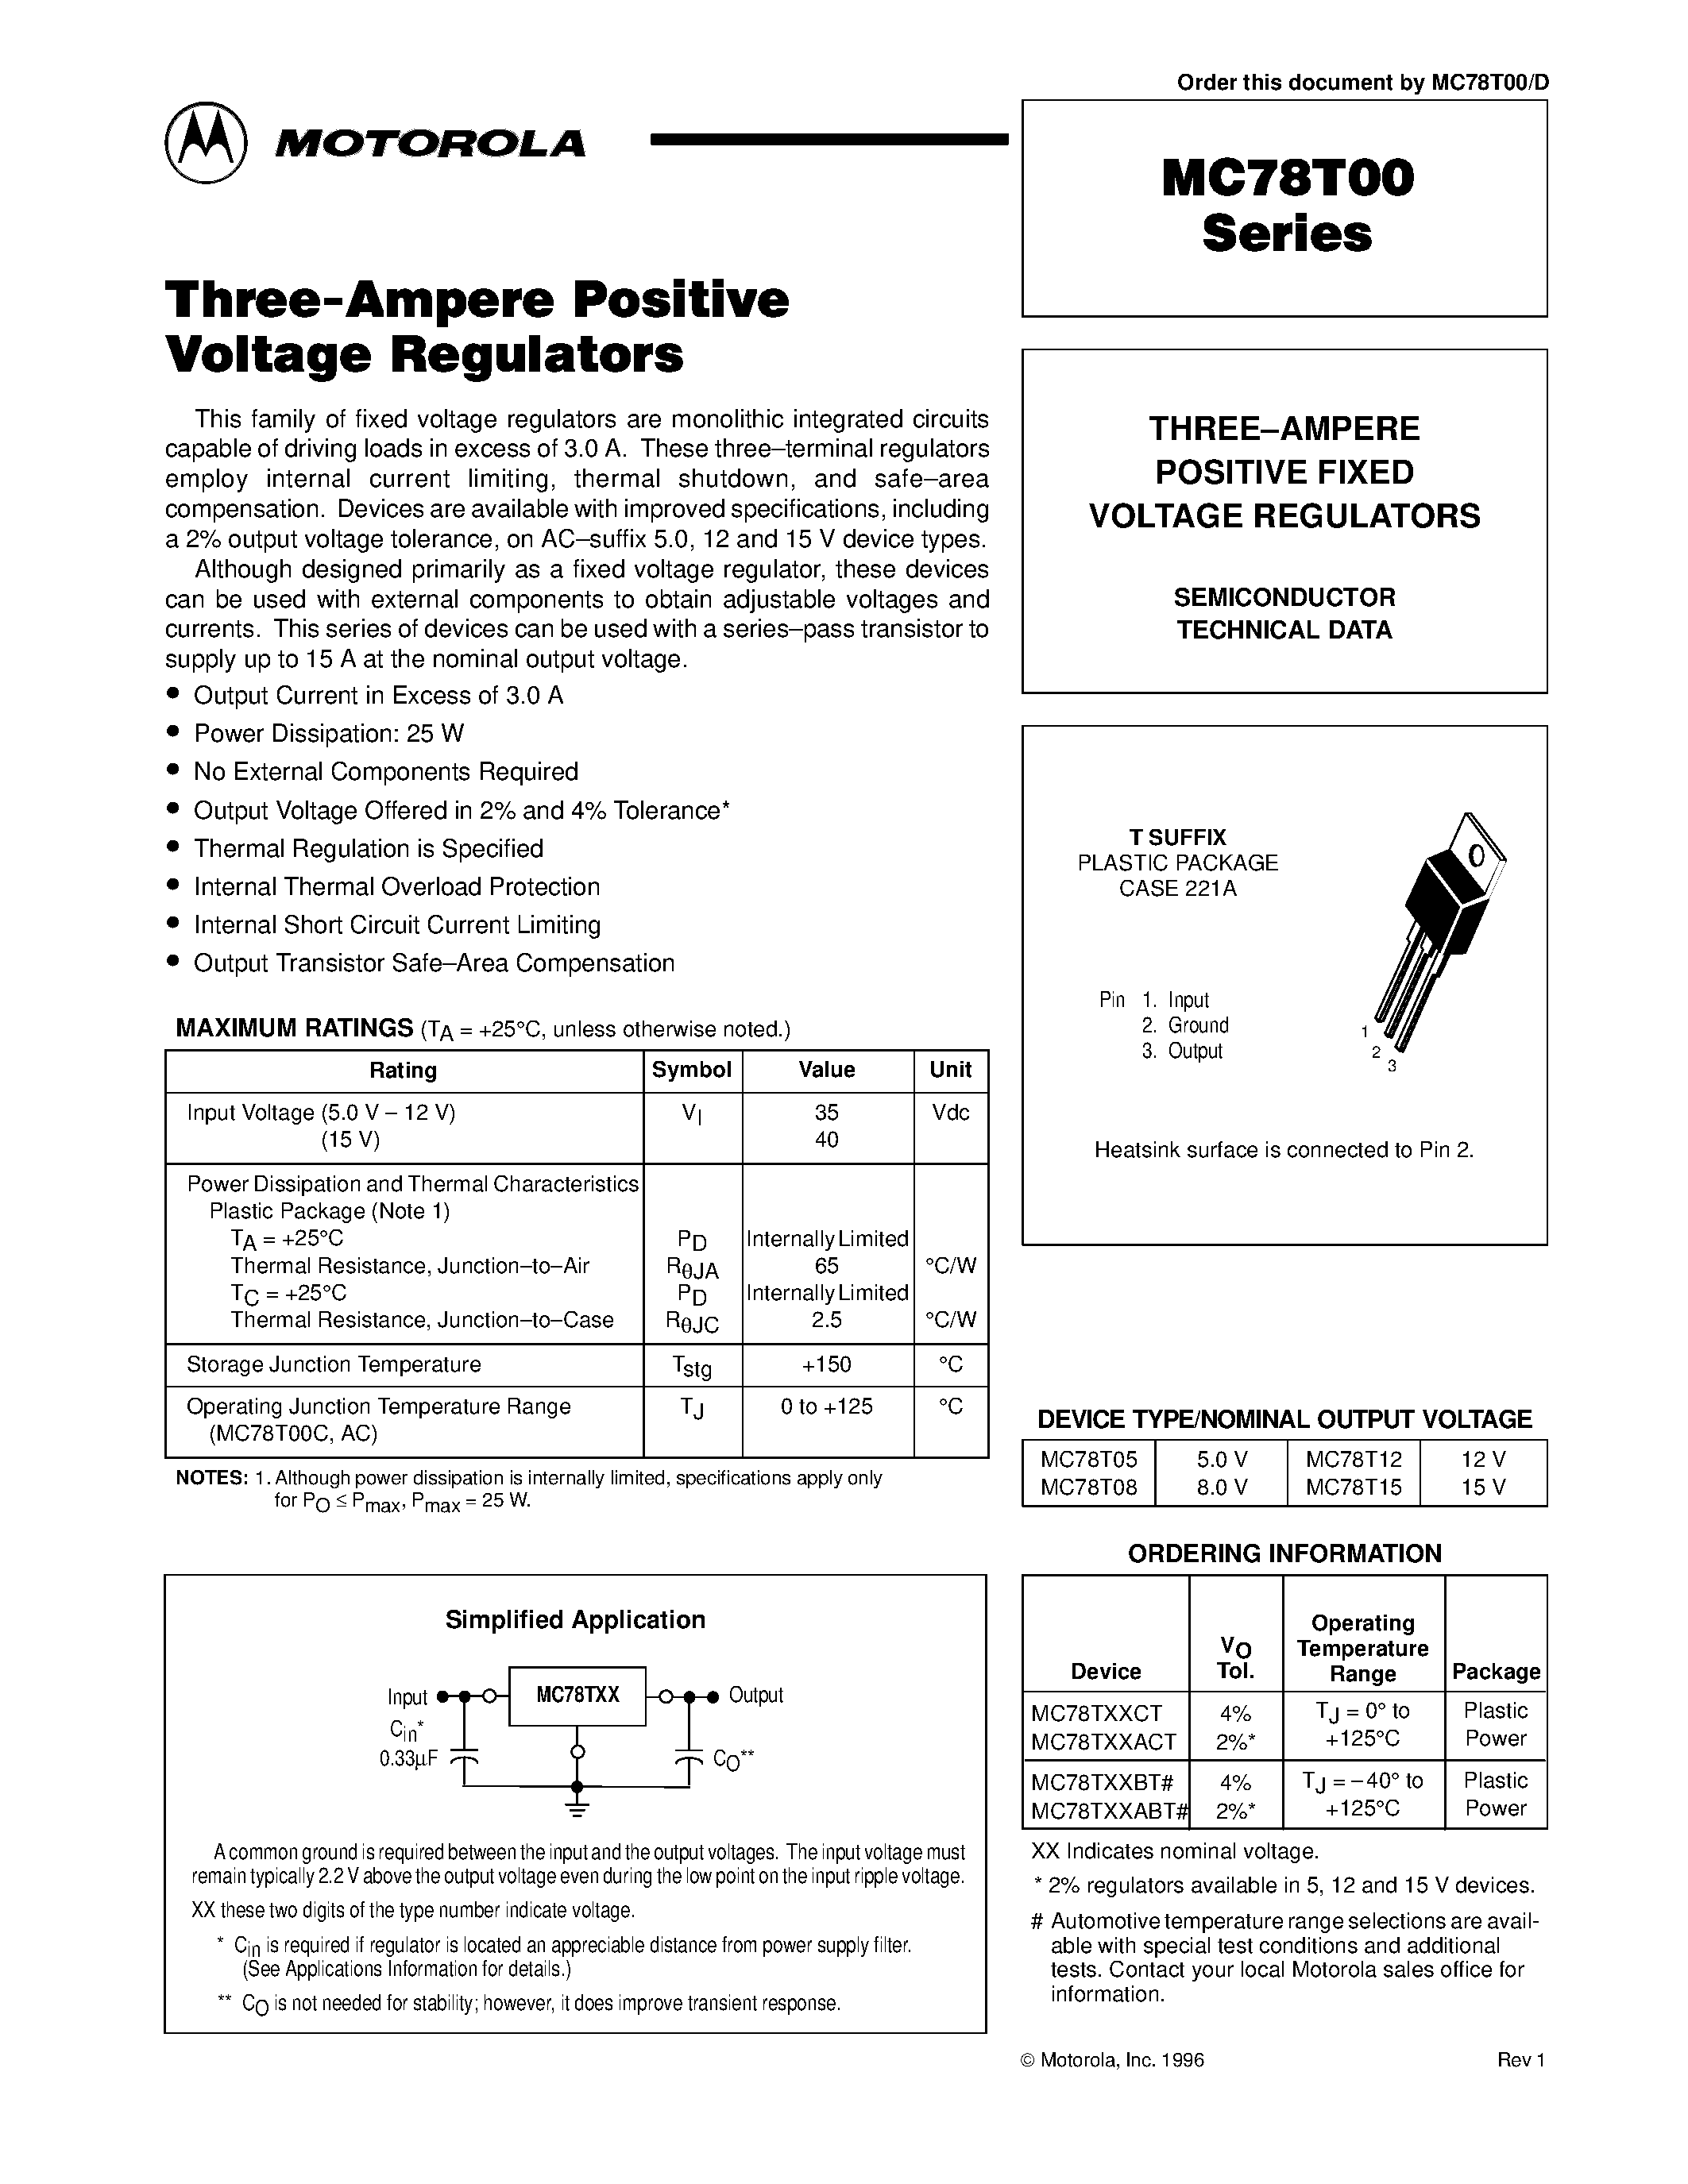 Даташит MC78T15AC - THREE-AMPERE POSITIVE FIXED VOLTAGE REGULATORS страница 1